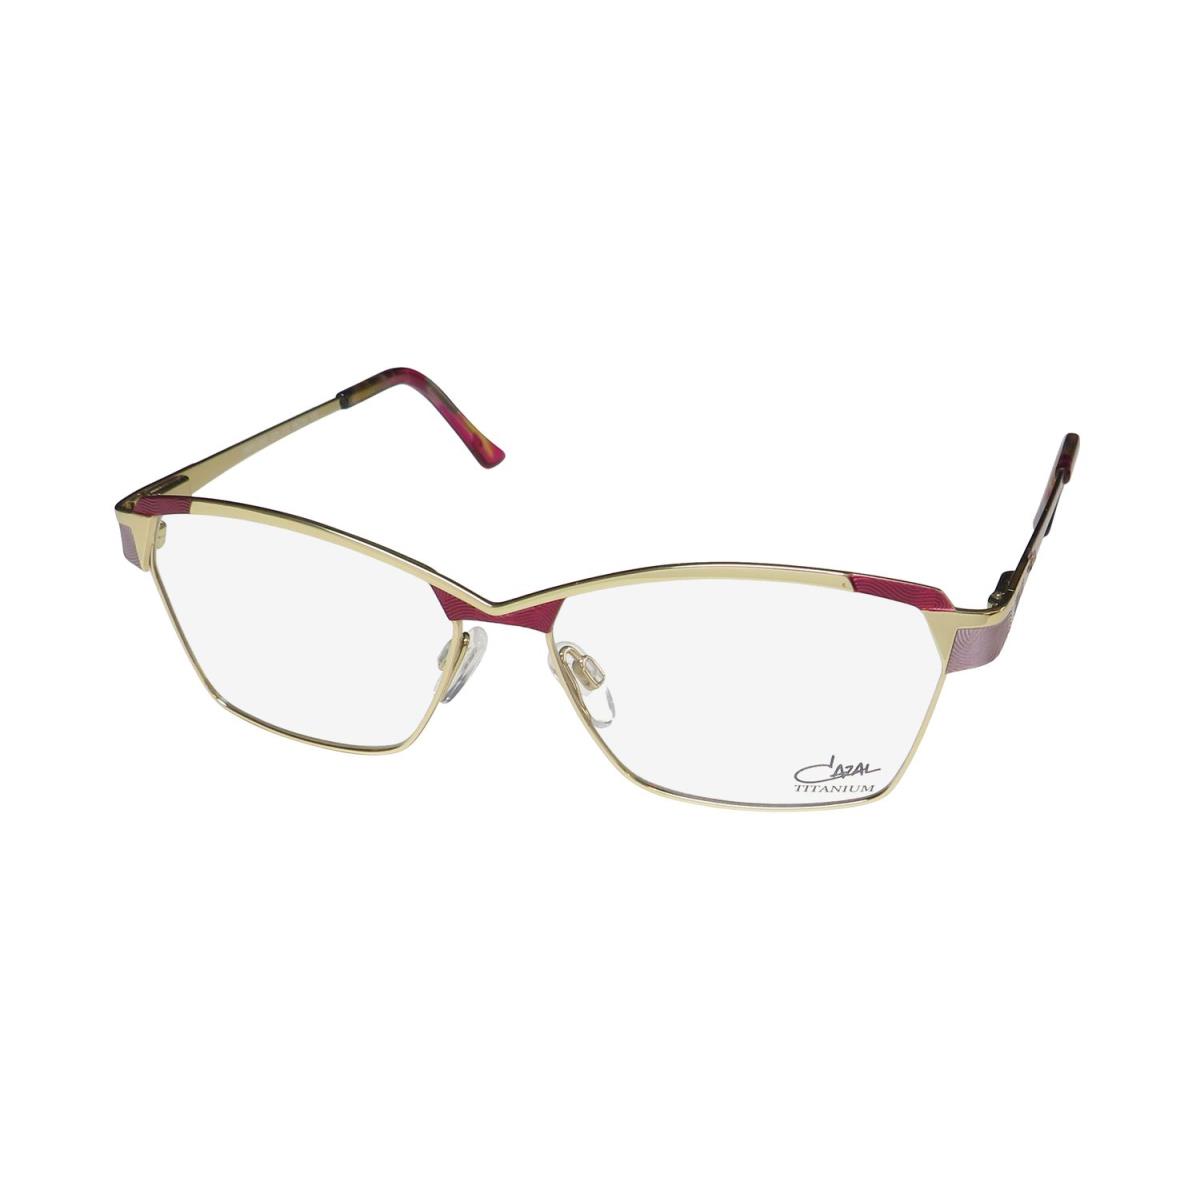 Cazal 4285 Titanium Metal NO Allergy Materials Premium Eyeglass Frame/eyewear Gold / Pink